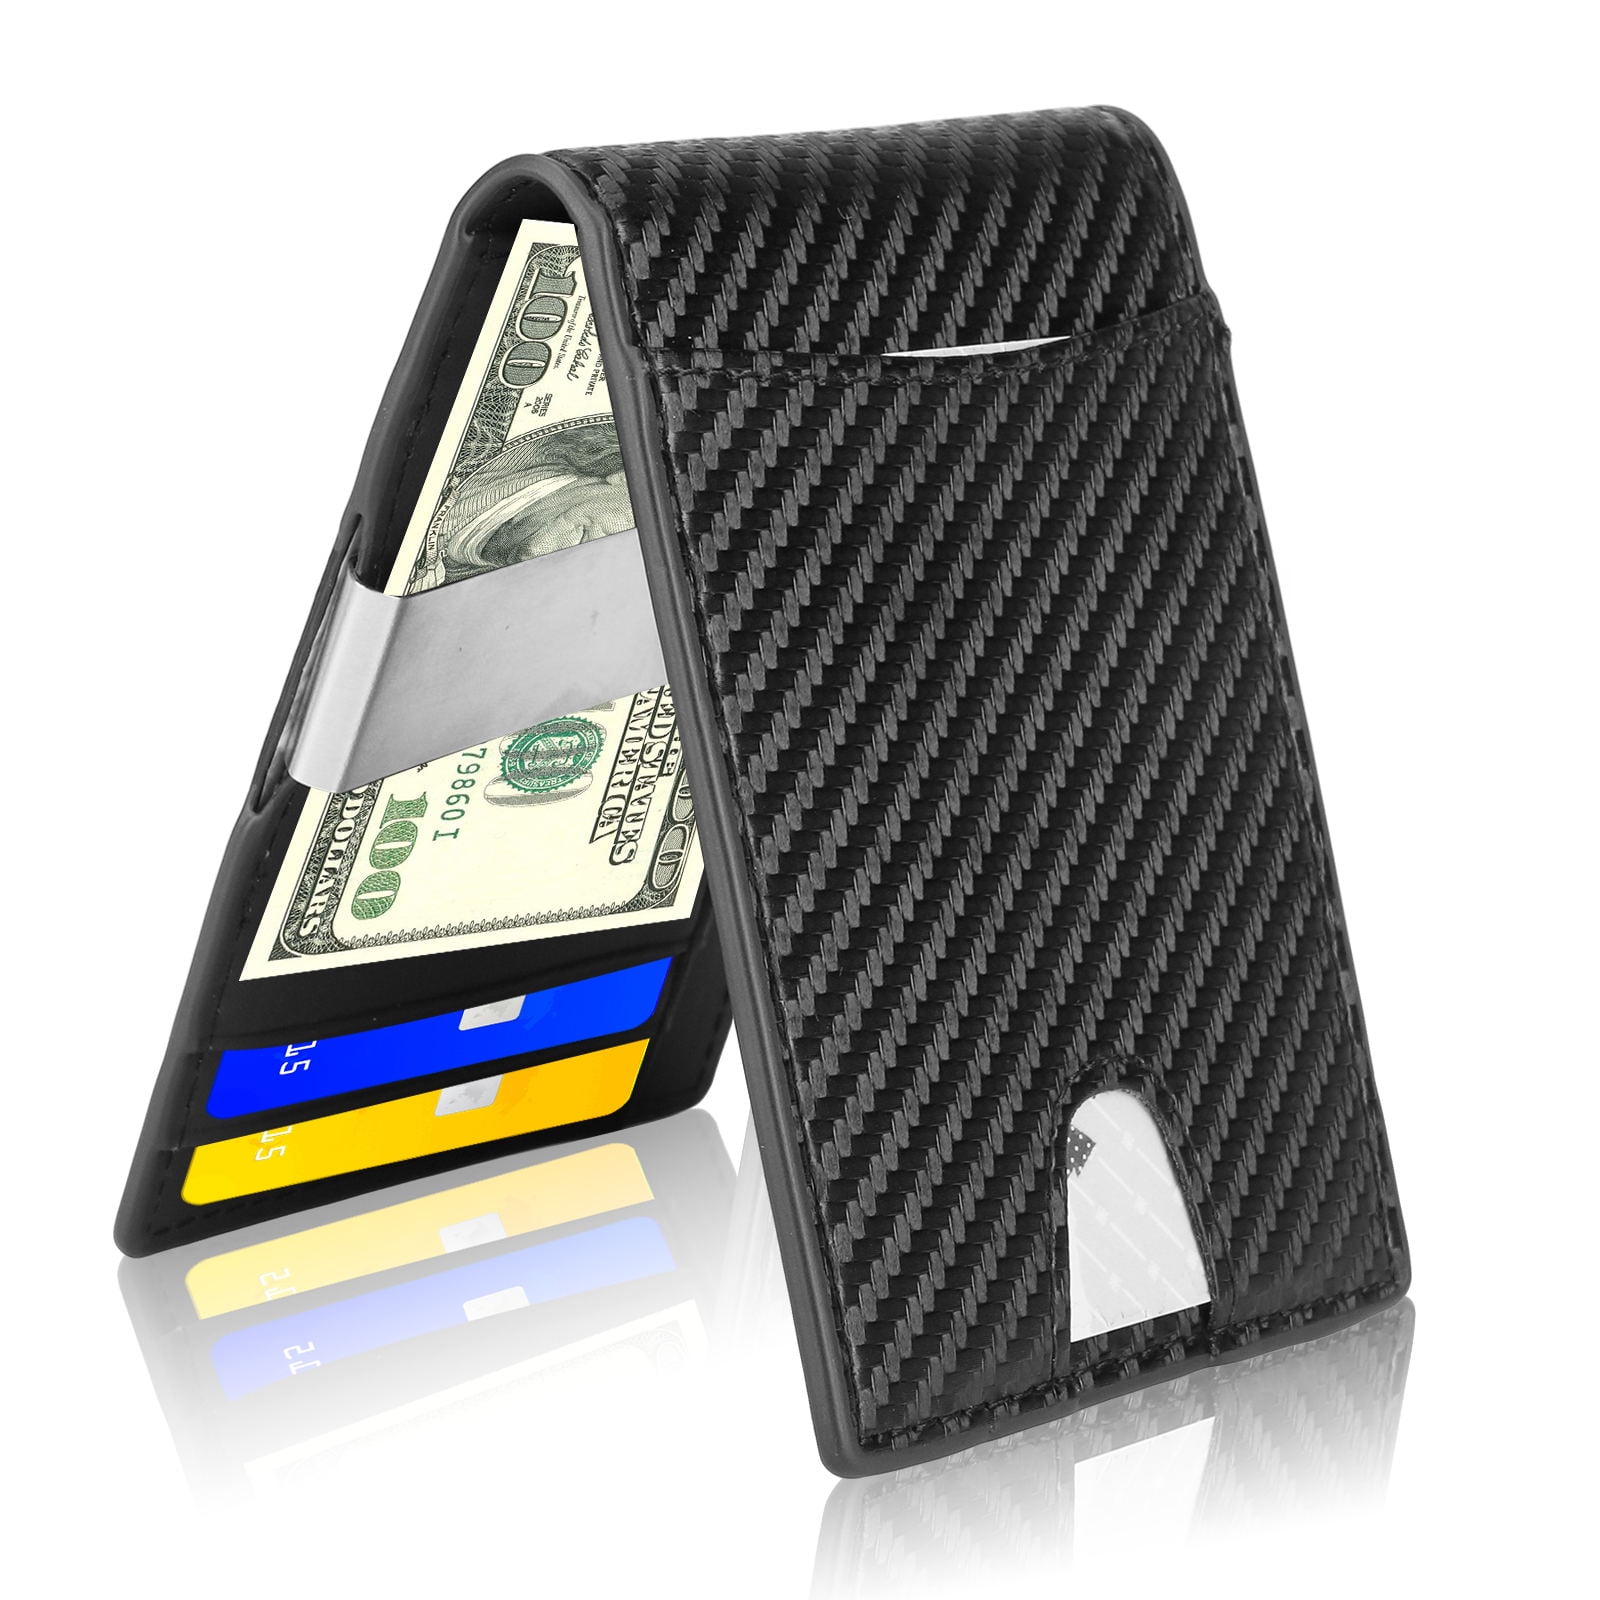 Carbon Fiber Wallet, Metal Money Clip Wallet, RFID Blocking